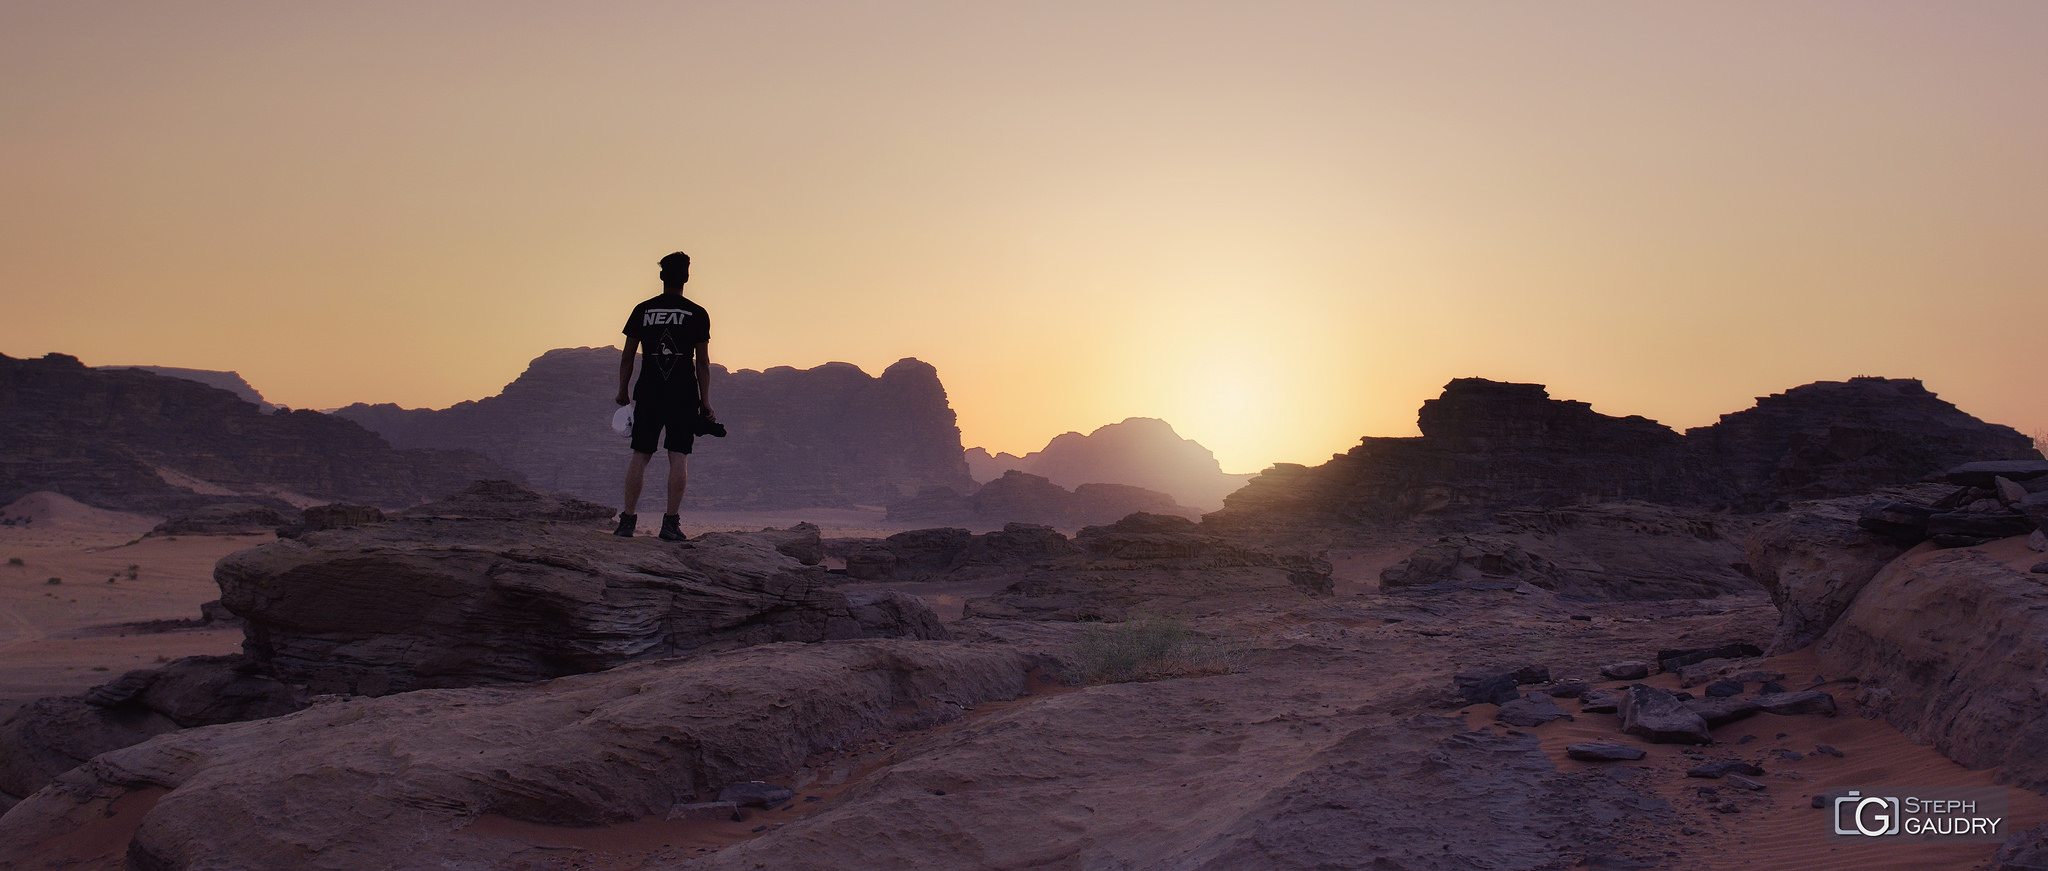 Au cinéma ce soir / Wadi-Rum, sunset in the desert - my son Tom